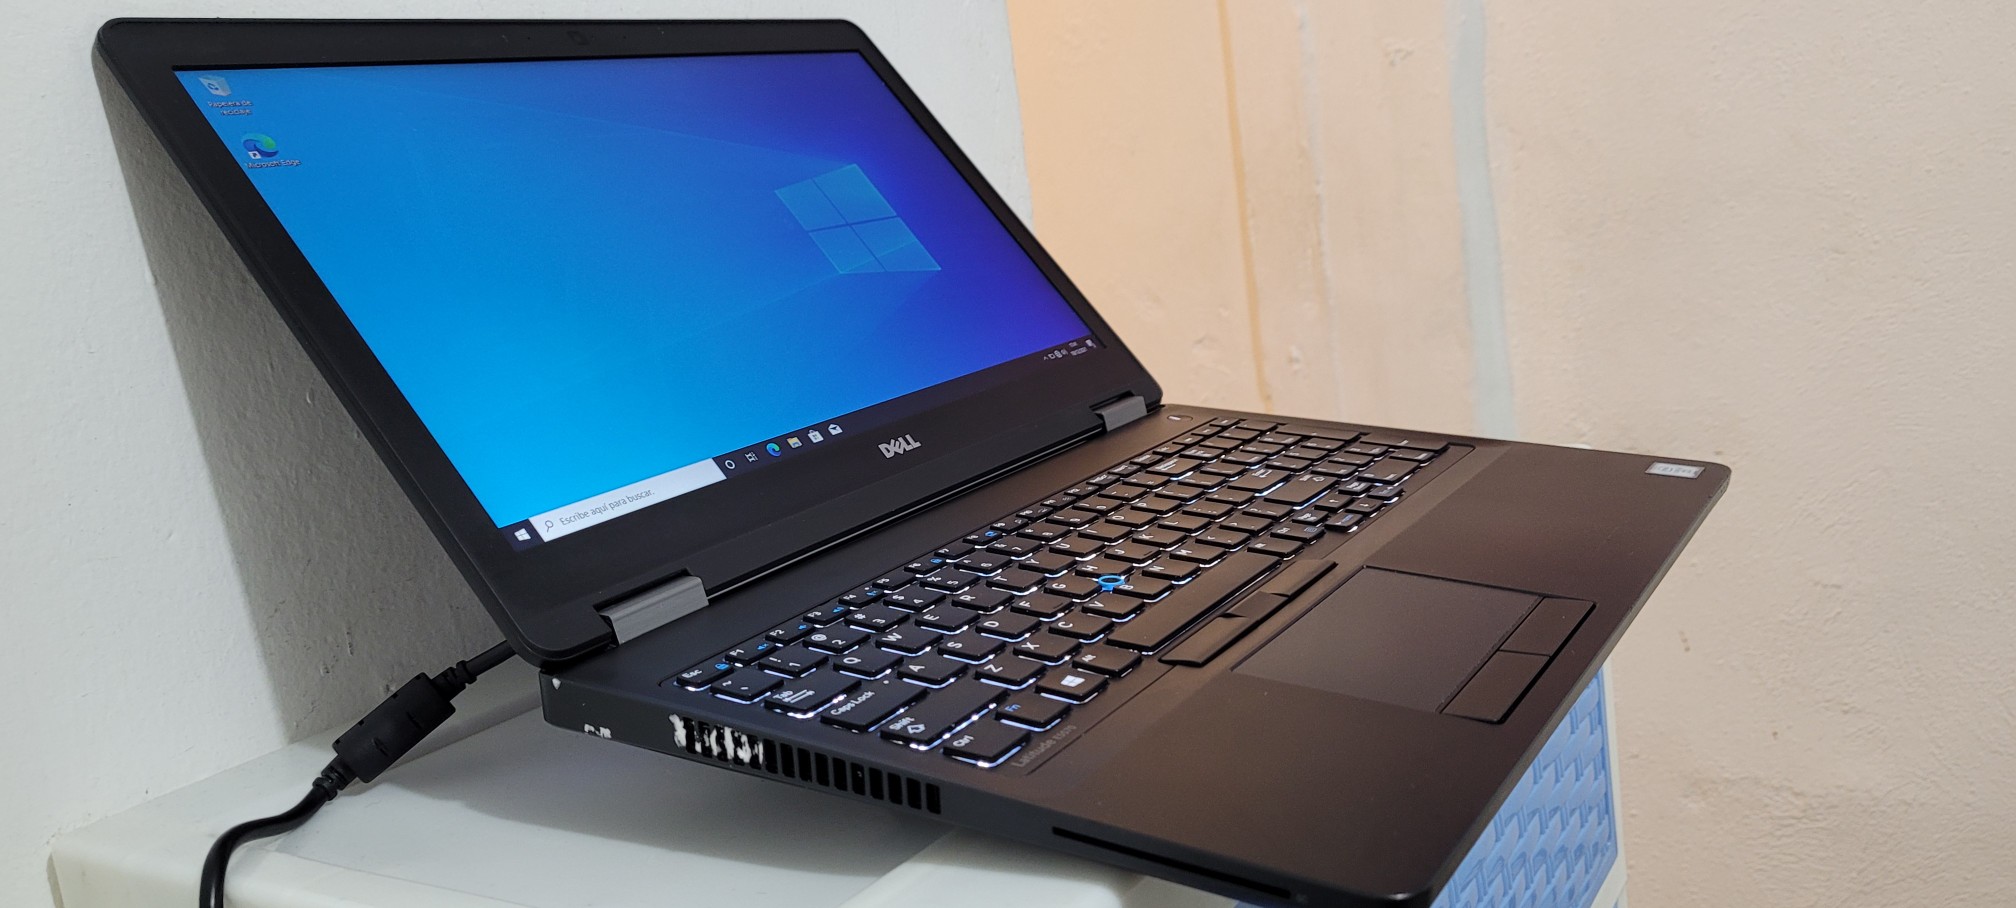 computadoras y laptops - Nueva Dell 5570 17 Pulg Core i7 6ta Ram 16gb SSD 512GB Aty Radeon R7 M370 2gb 1